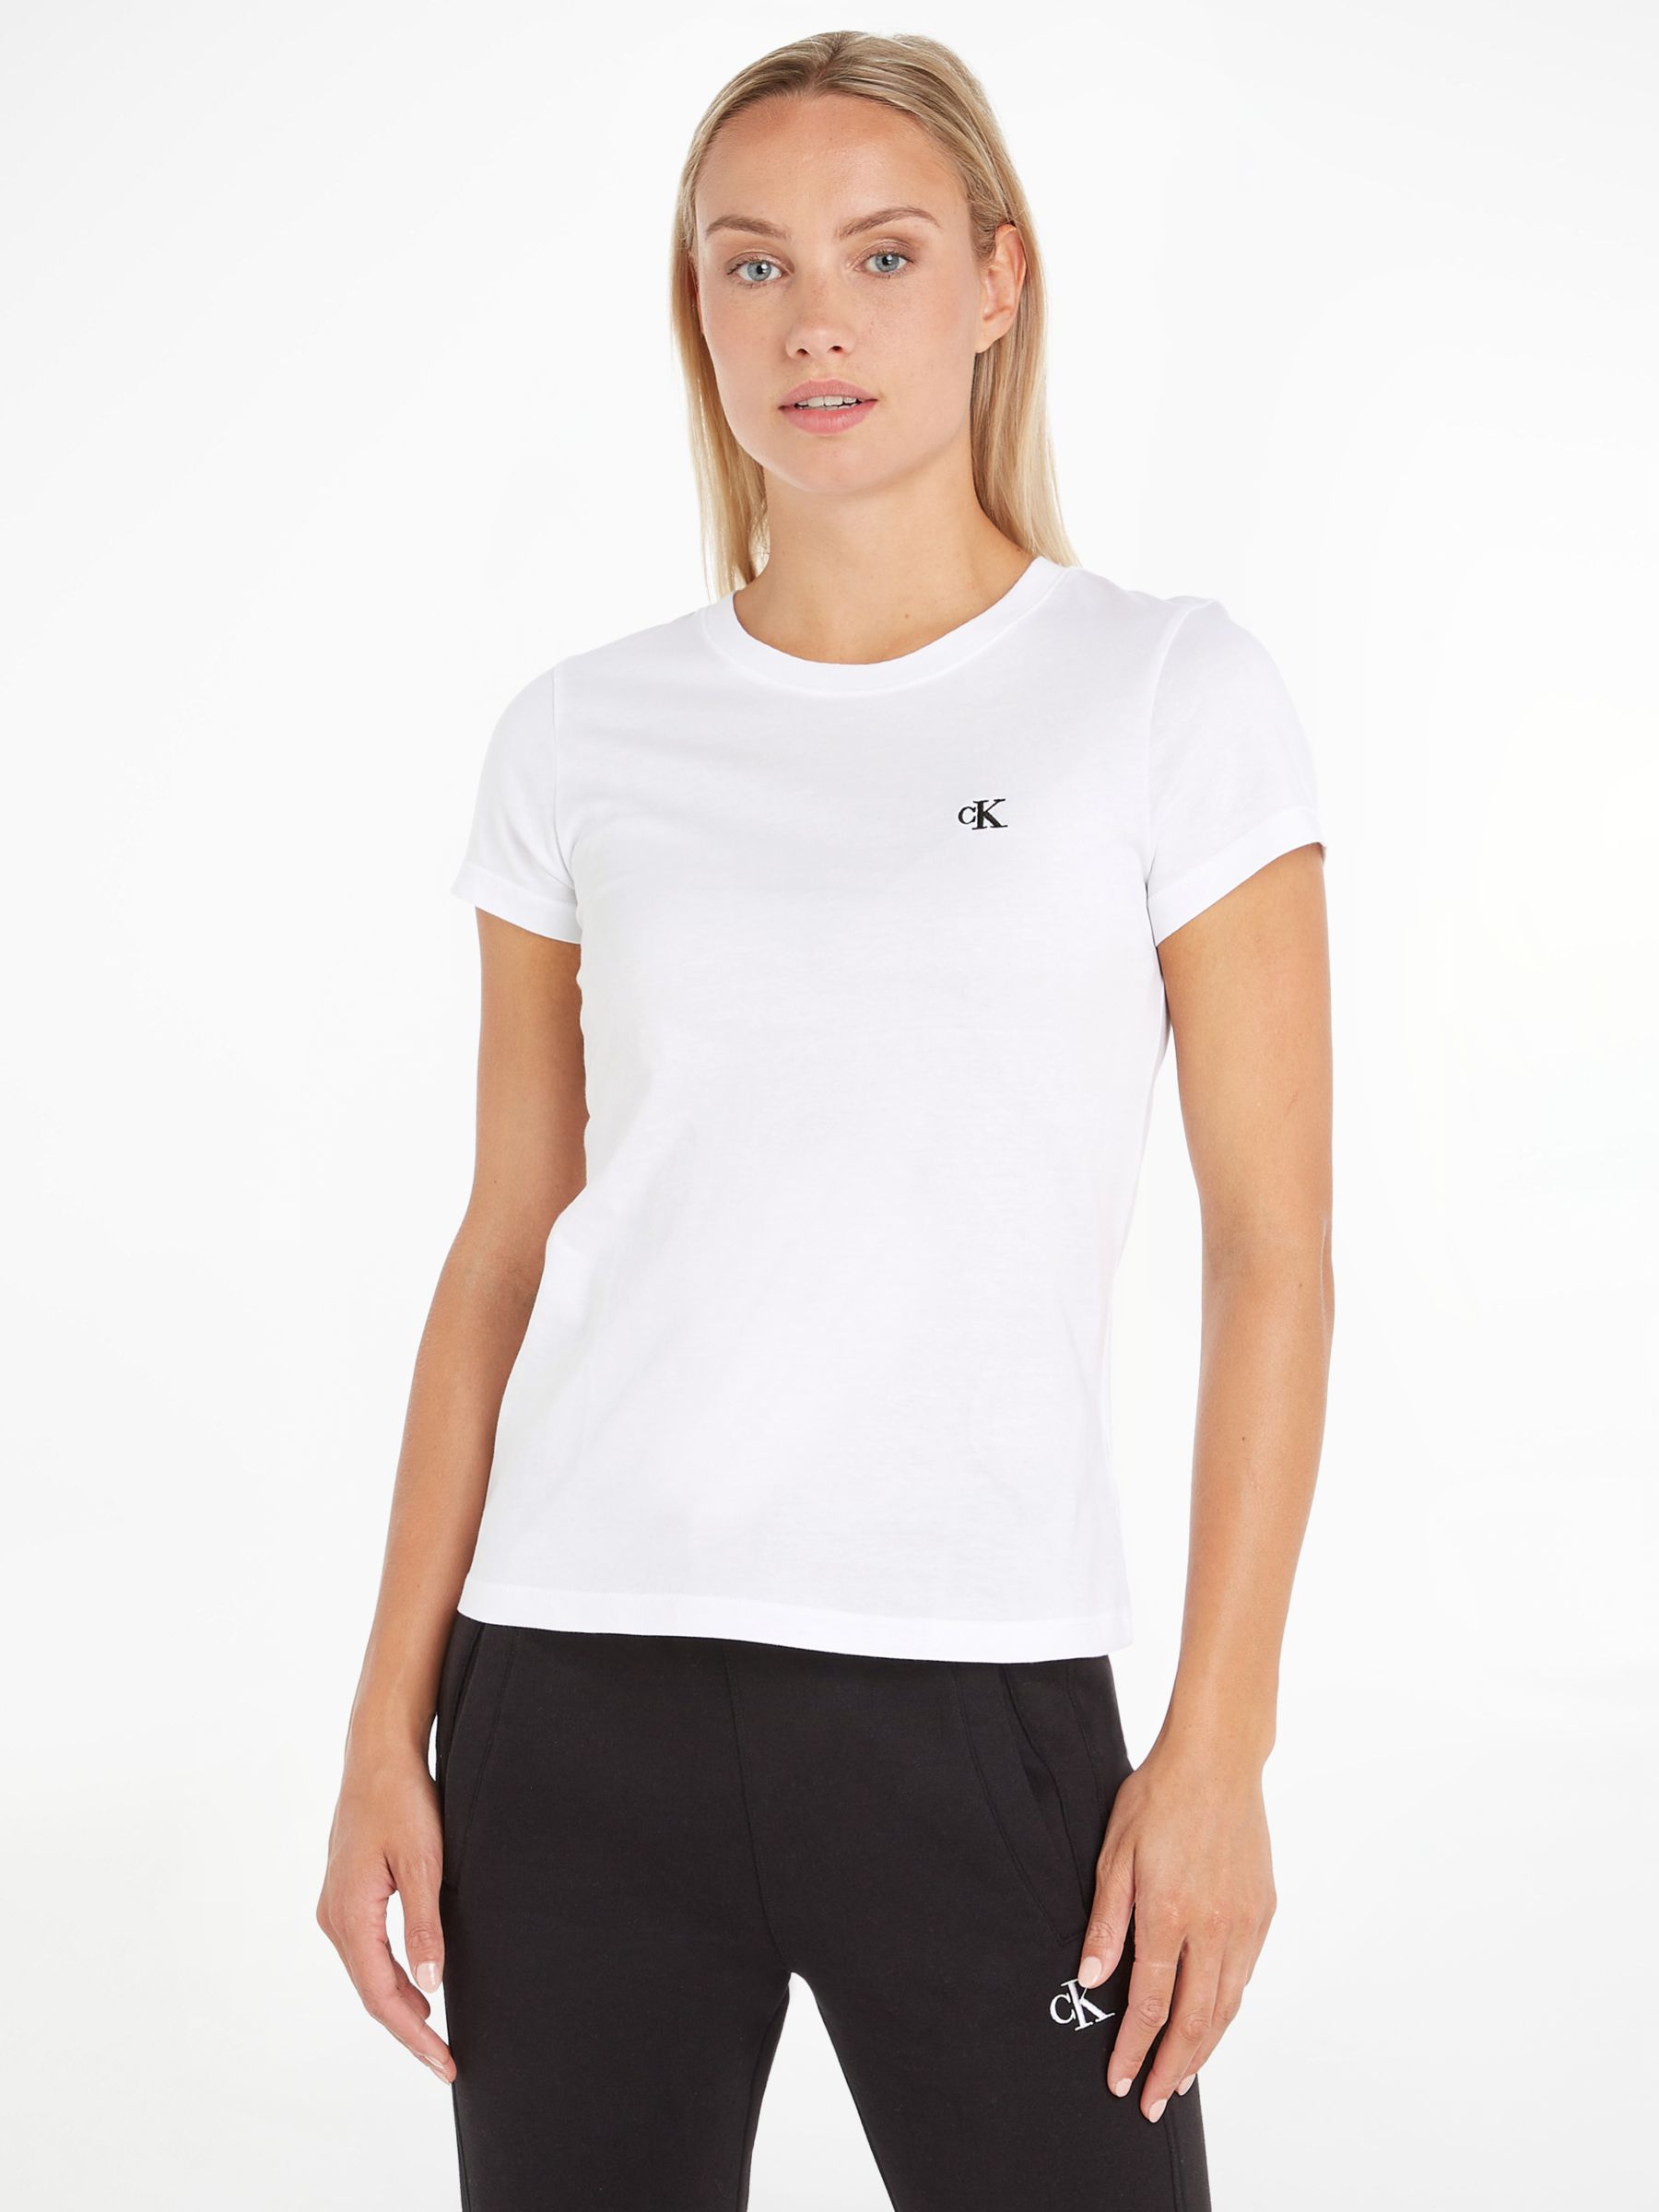 Calvin Klein Performance Embroidery Slim T-Shirt at John Lewis & Partners